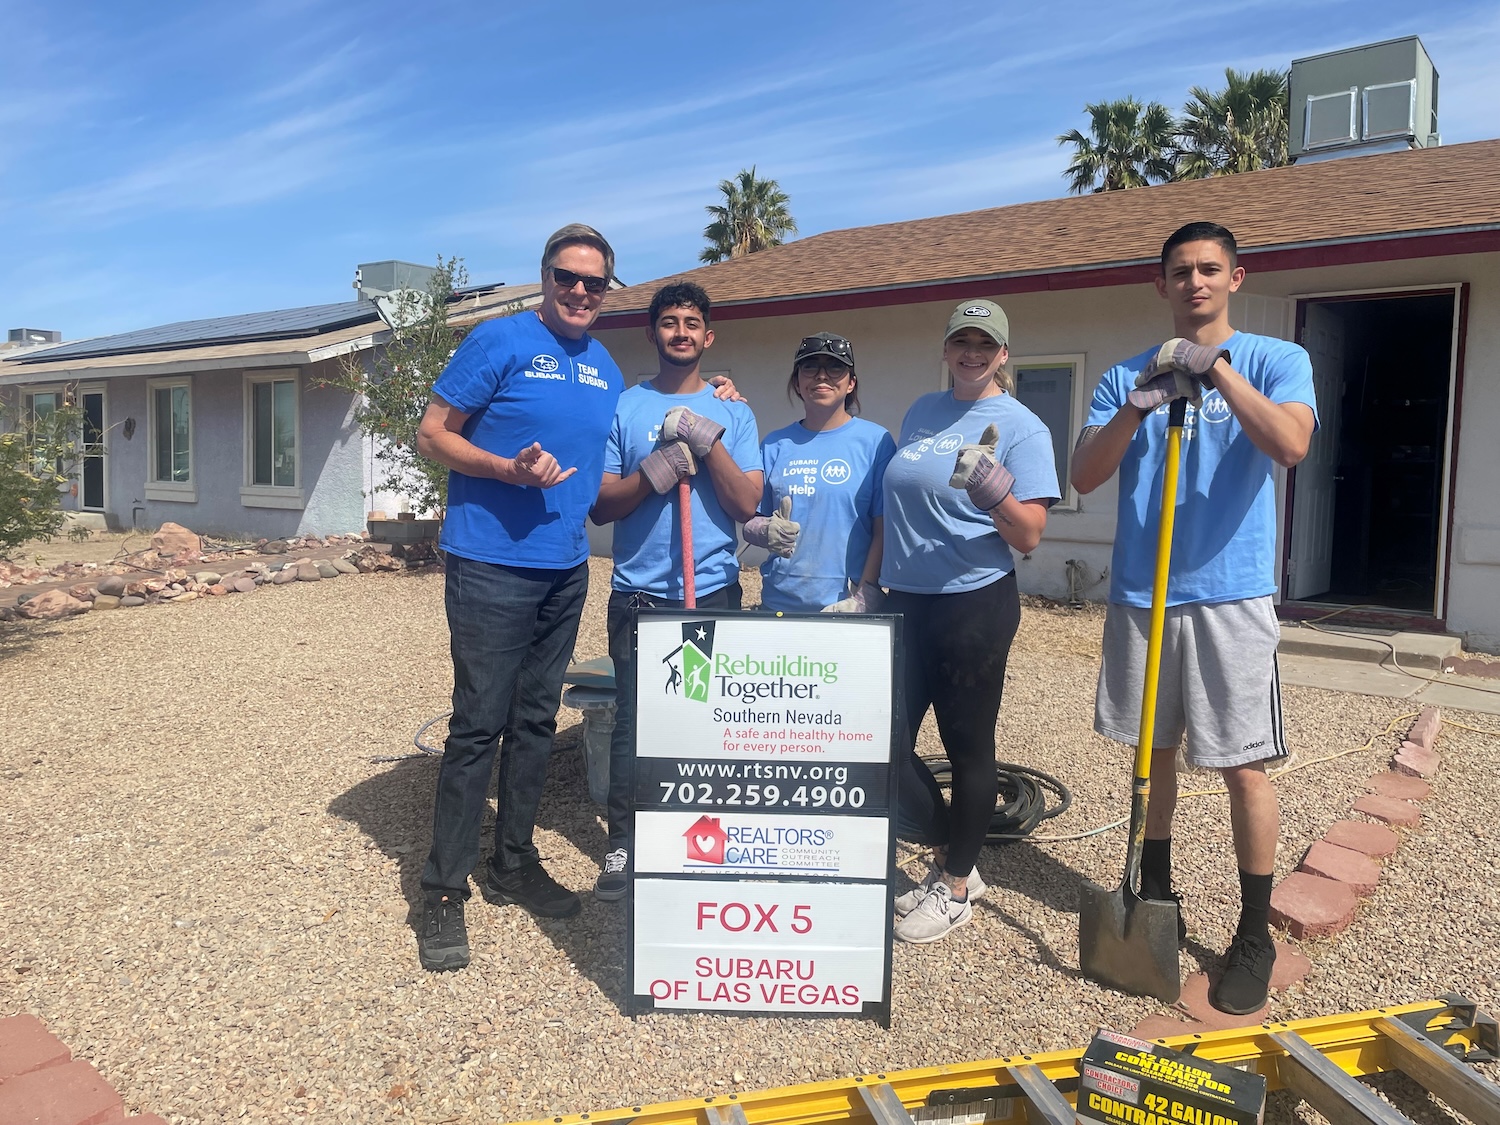 Subaru of Las Vegas employees volunteer with Rebuilding Together Southern Nevada